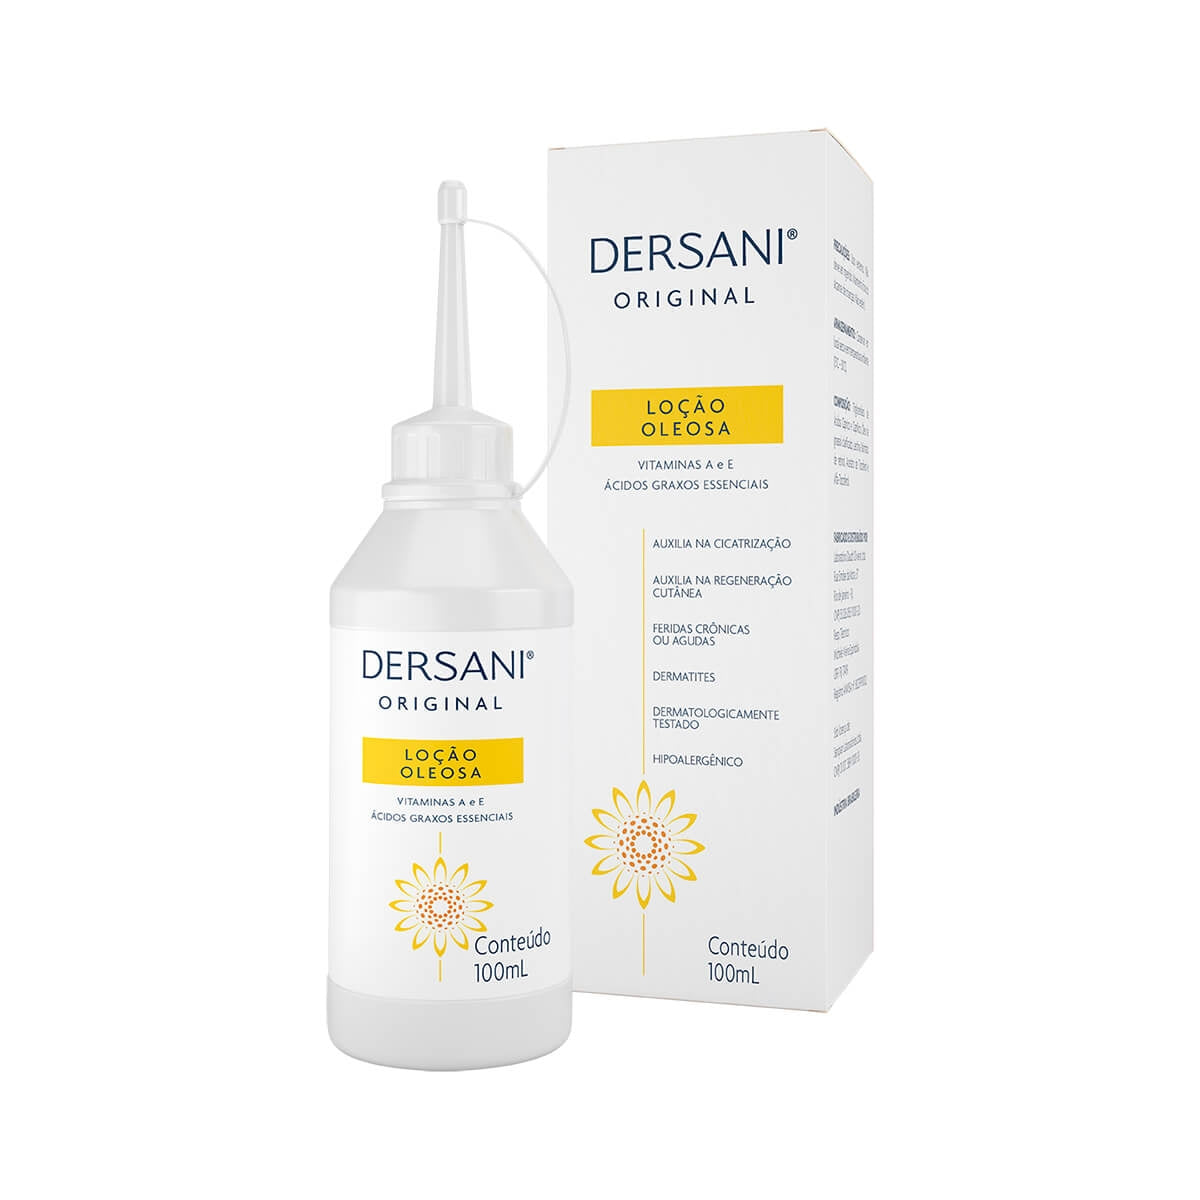 Dersani Original Oily Healing and Bactericidal Lotion - 100ml